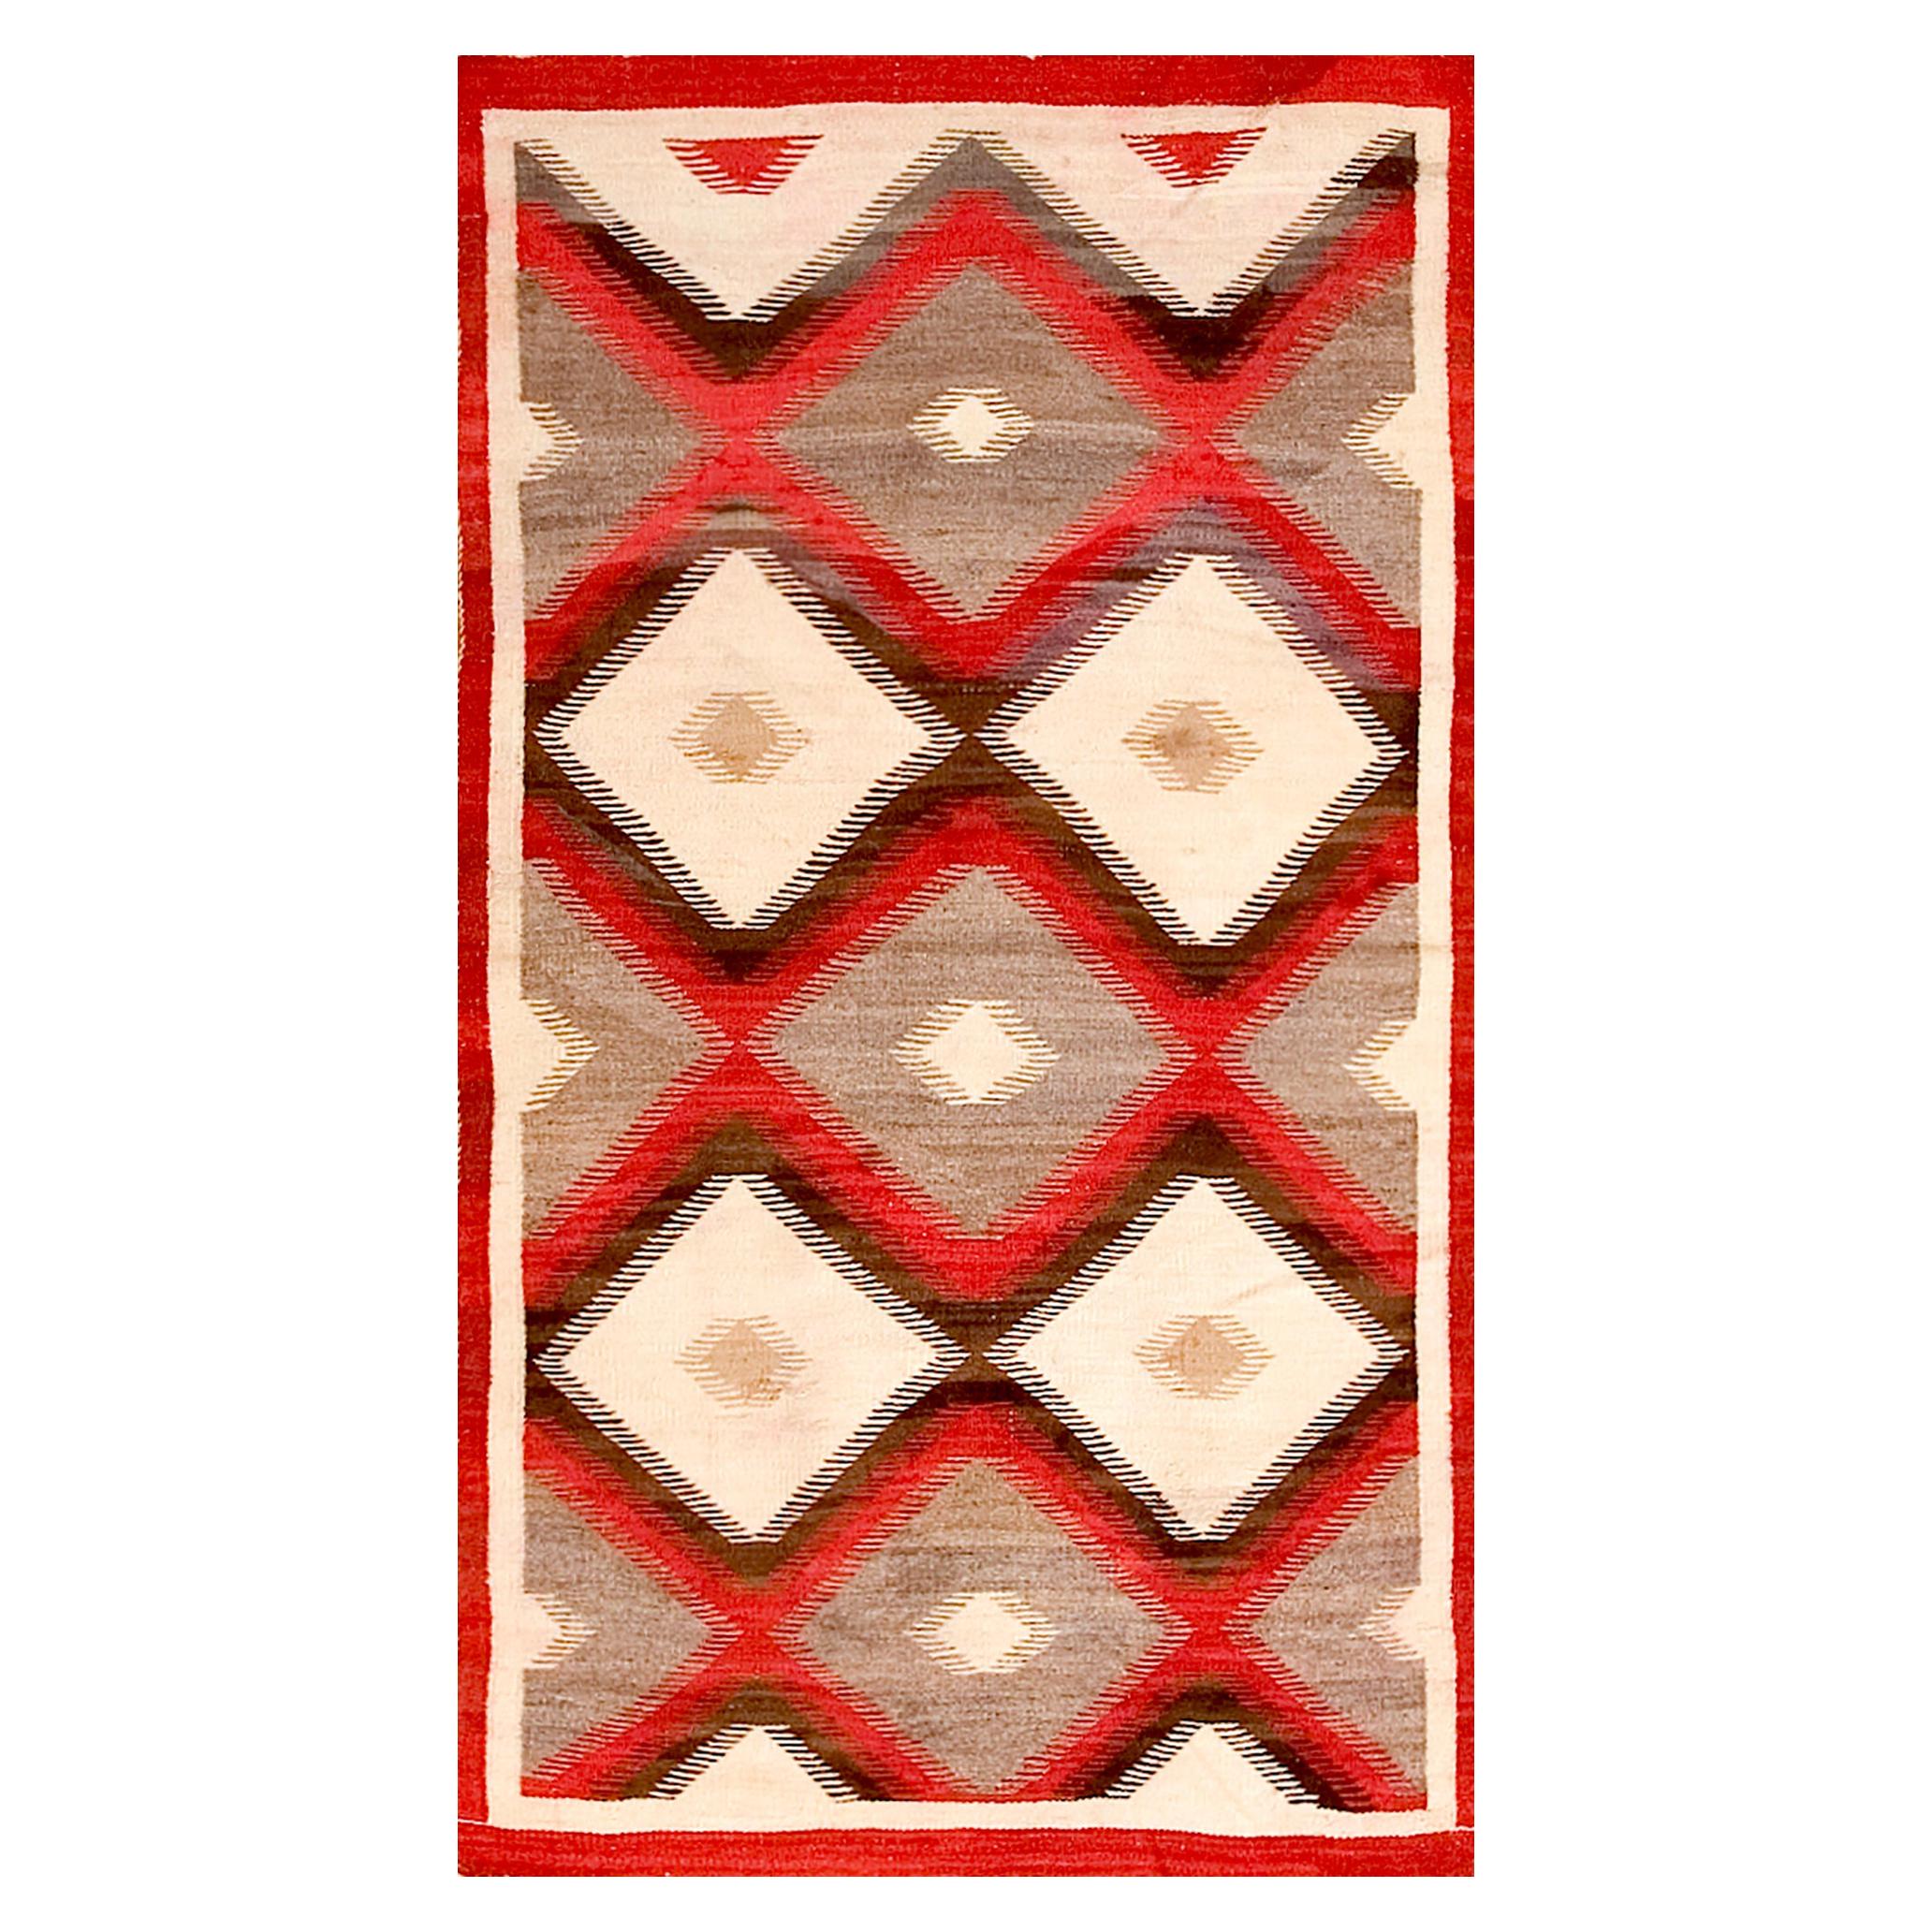 Early 20th Century American Navajo Carpet ( 3' x 5'6" - 91 x 168 )